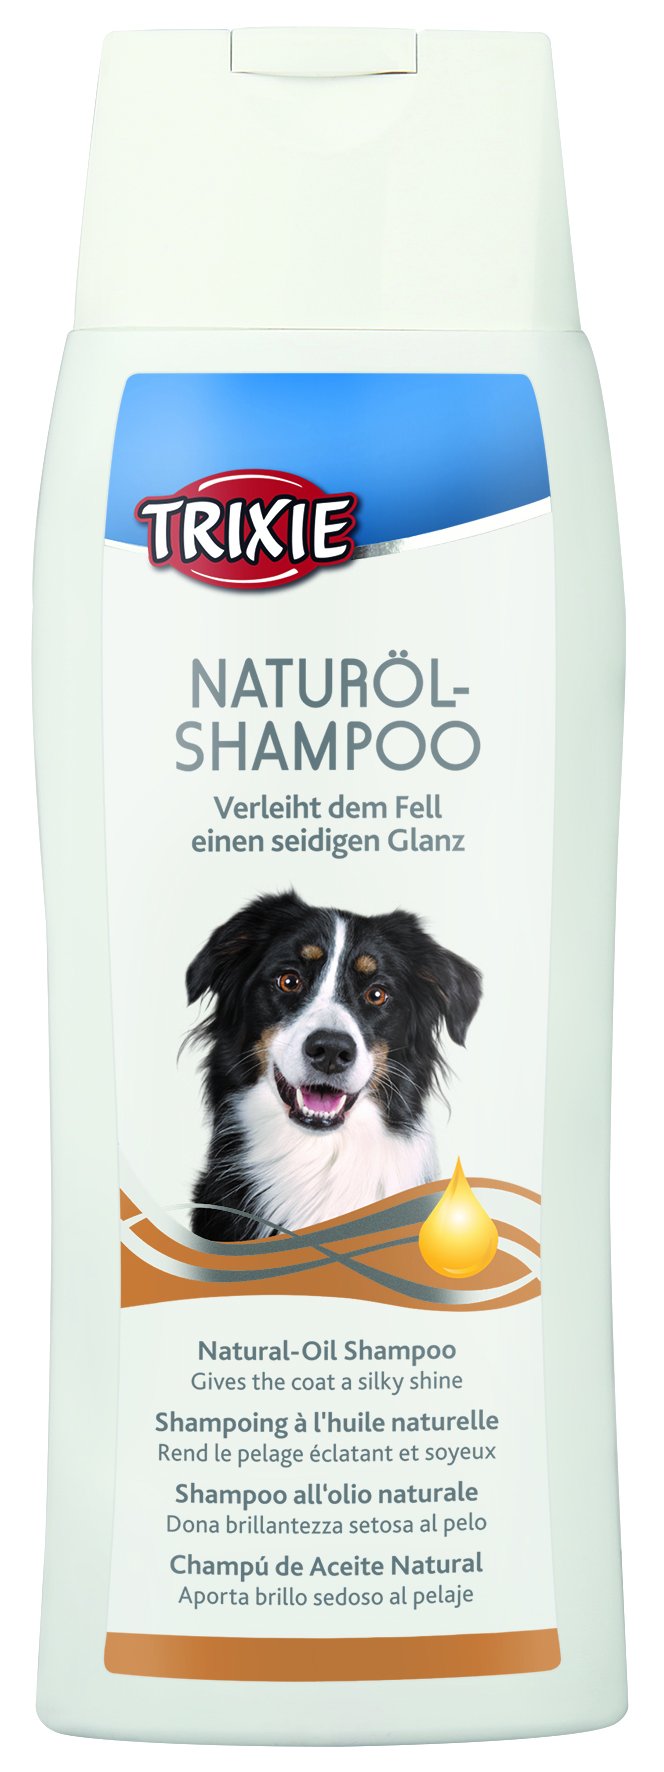 29195 Natural-oil shampoo, 250 ml